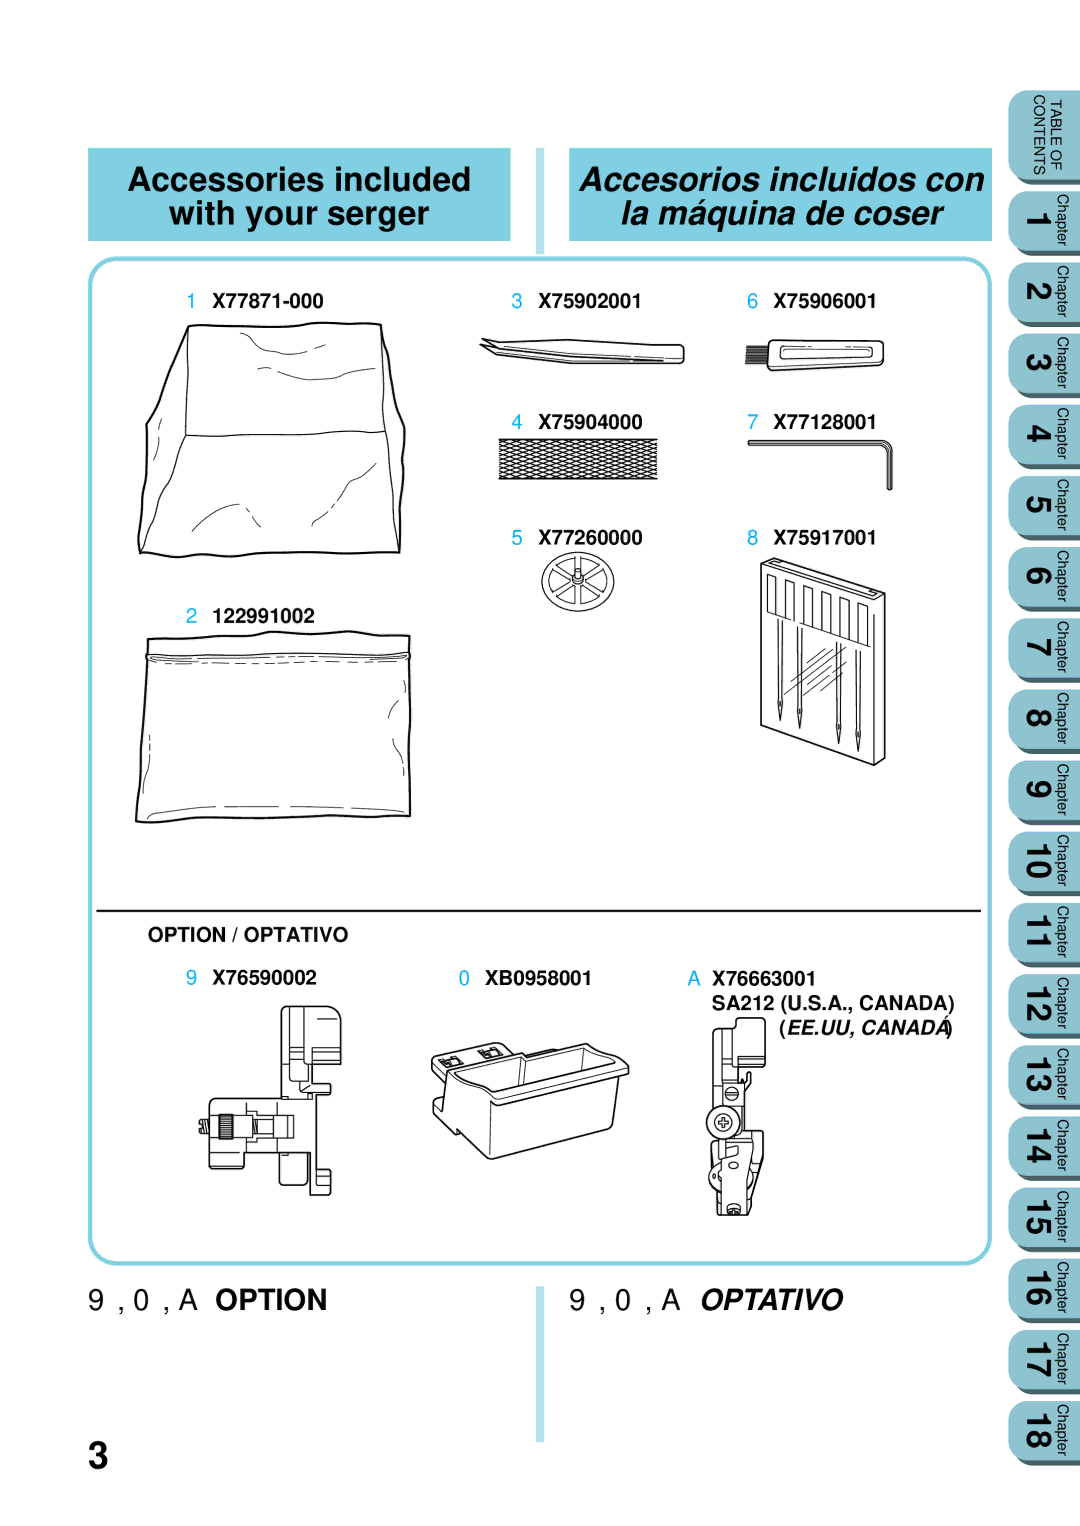 Brother UM 103D manual Accessories included, Accesorios incluidos con, With your serger, La máquina de coser 